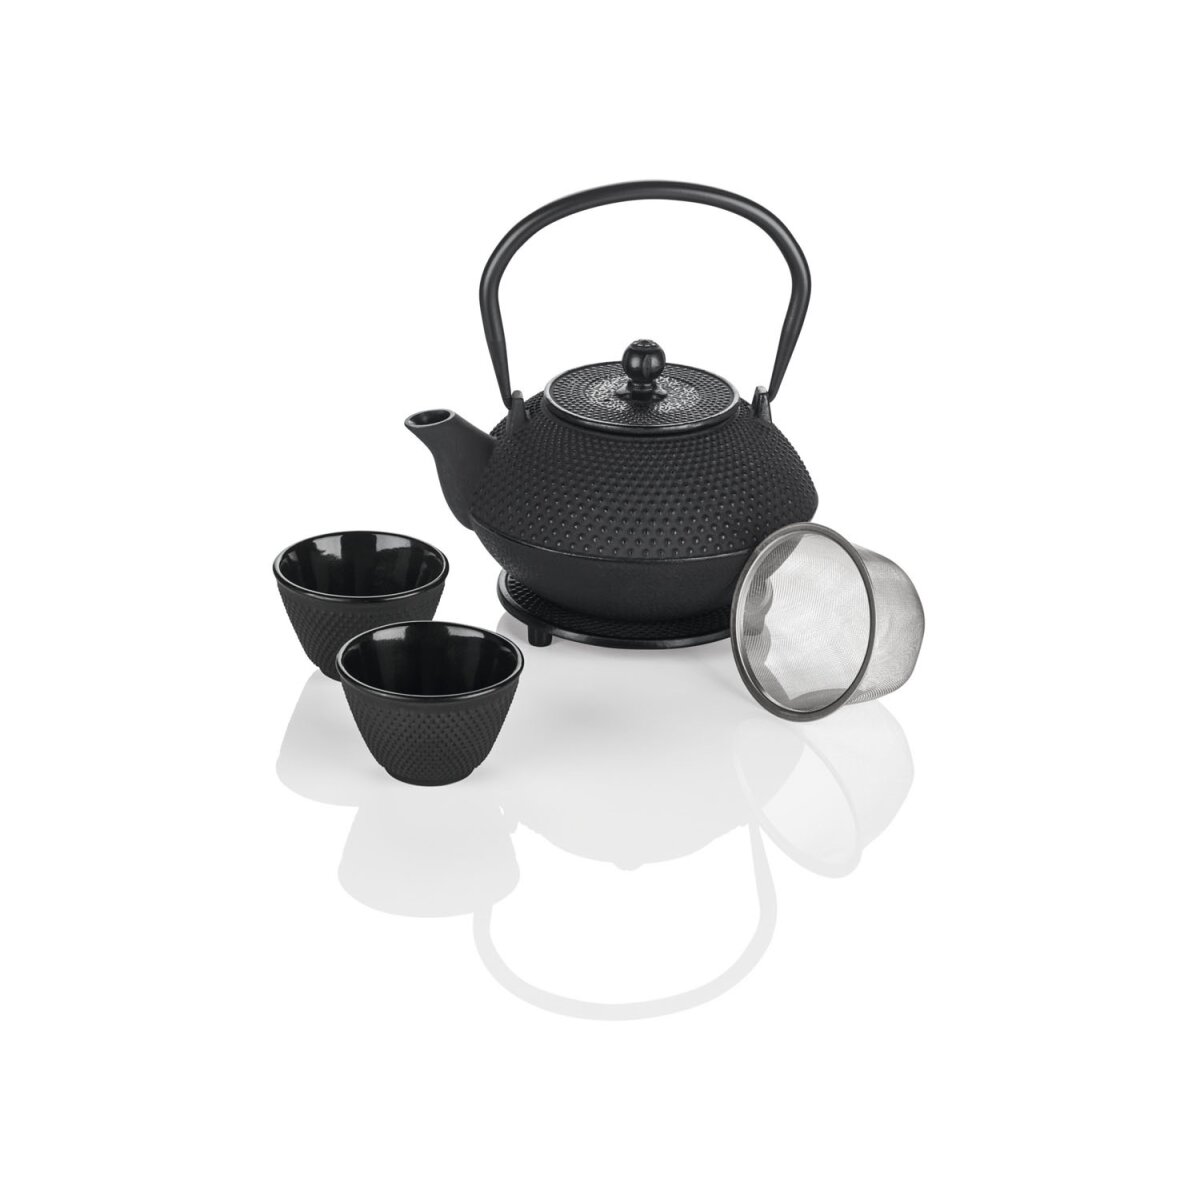 ERNESTO® Gusseisen-Tee-Set, 4-teilig, mit herausnehmbarem Teefilter -  B-Ware sehr gut, 20,99 €